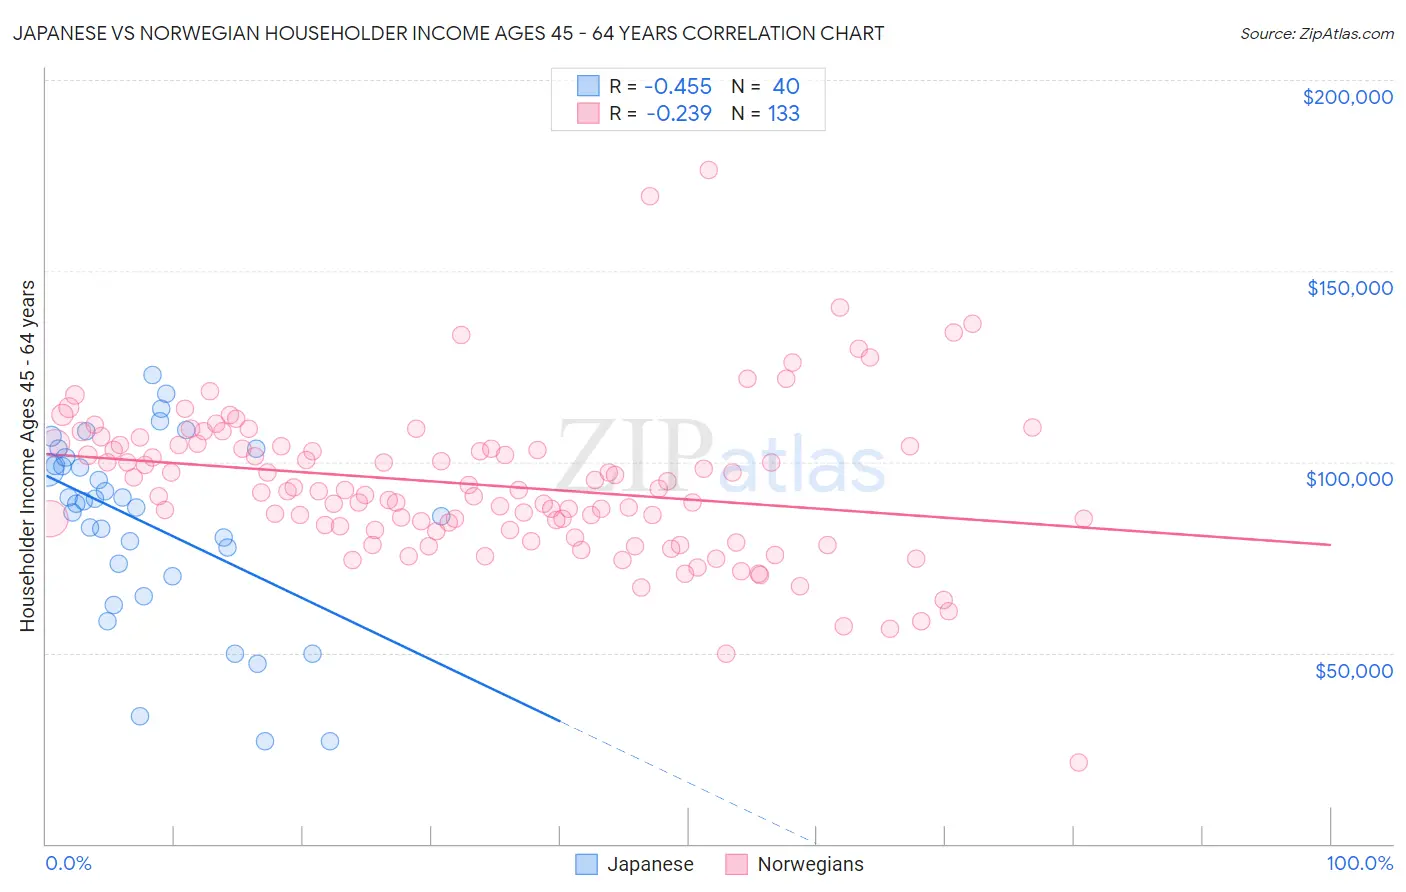 Japanese vs Norwegian Householder Income Ages 45 - 64 years